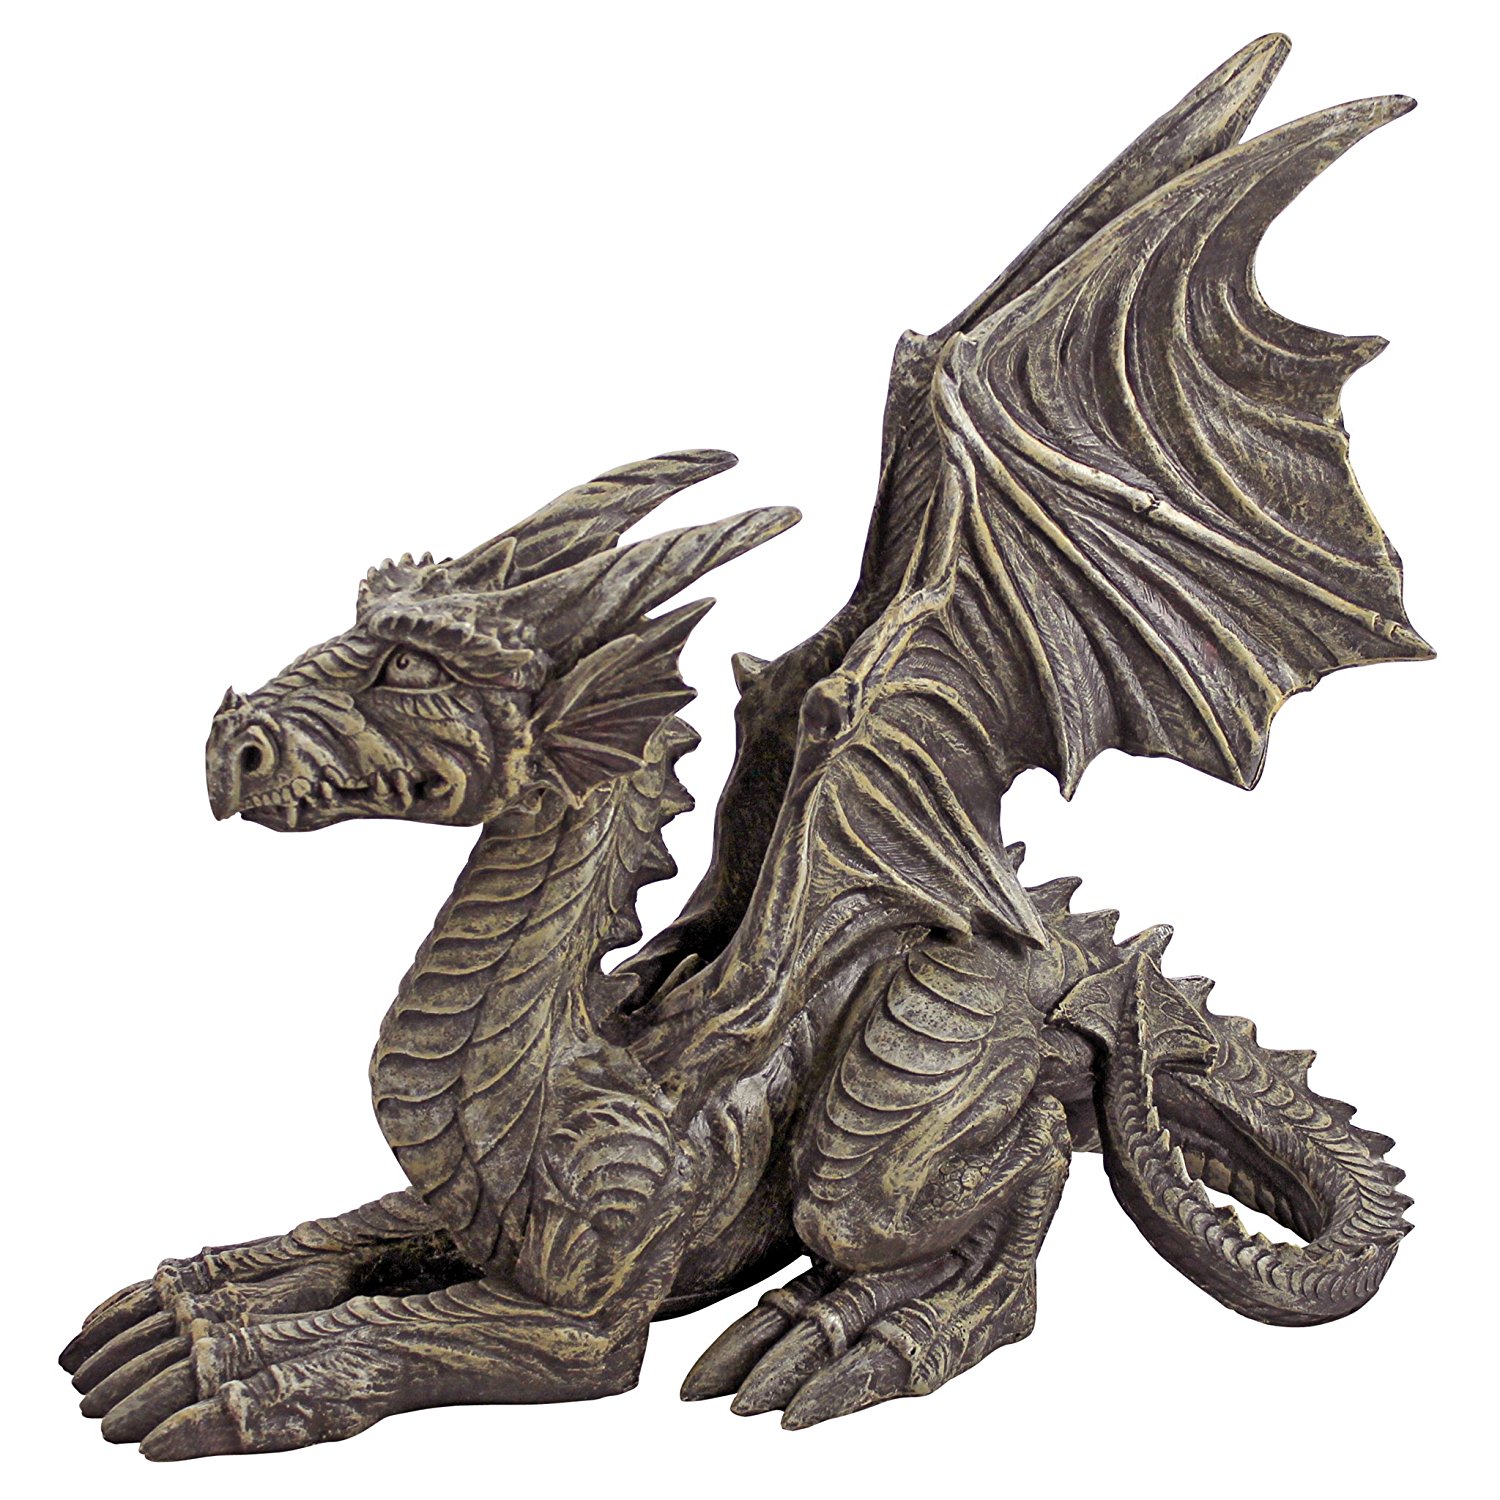 A dragon sculpture photo